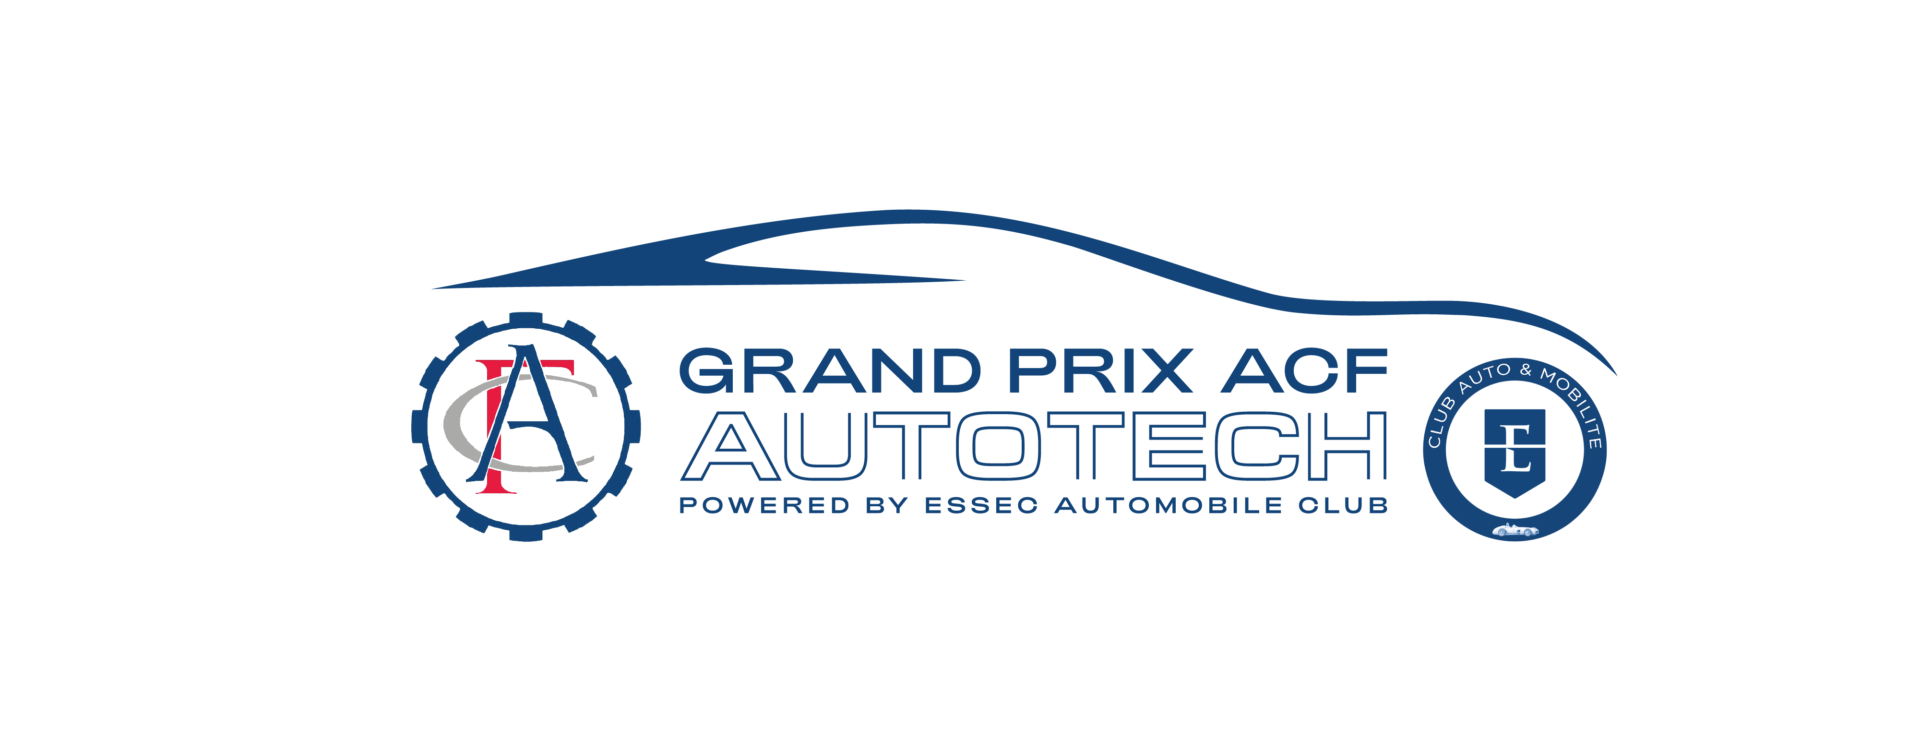 Logo de Grand Prix Automobile Club de France - Autotech